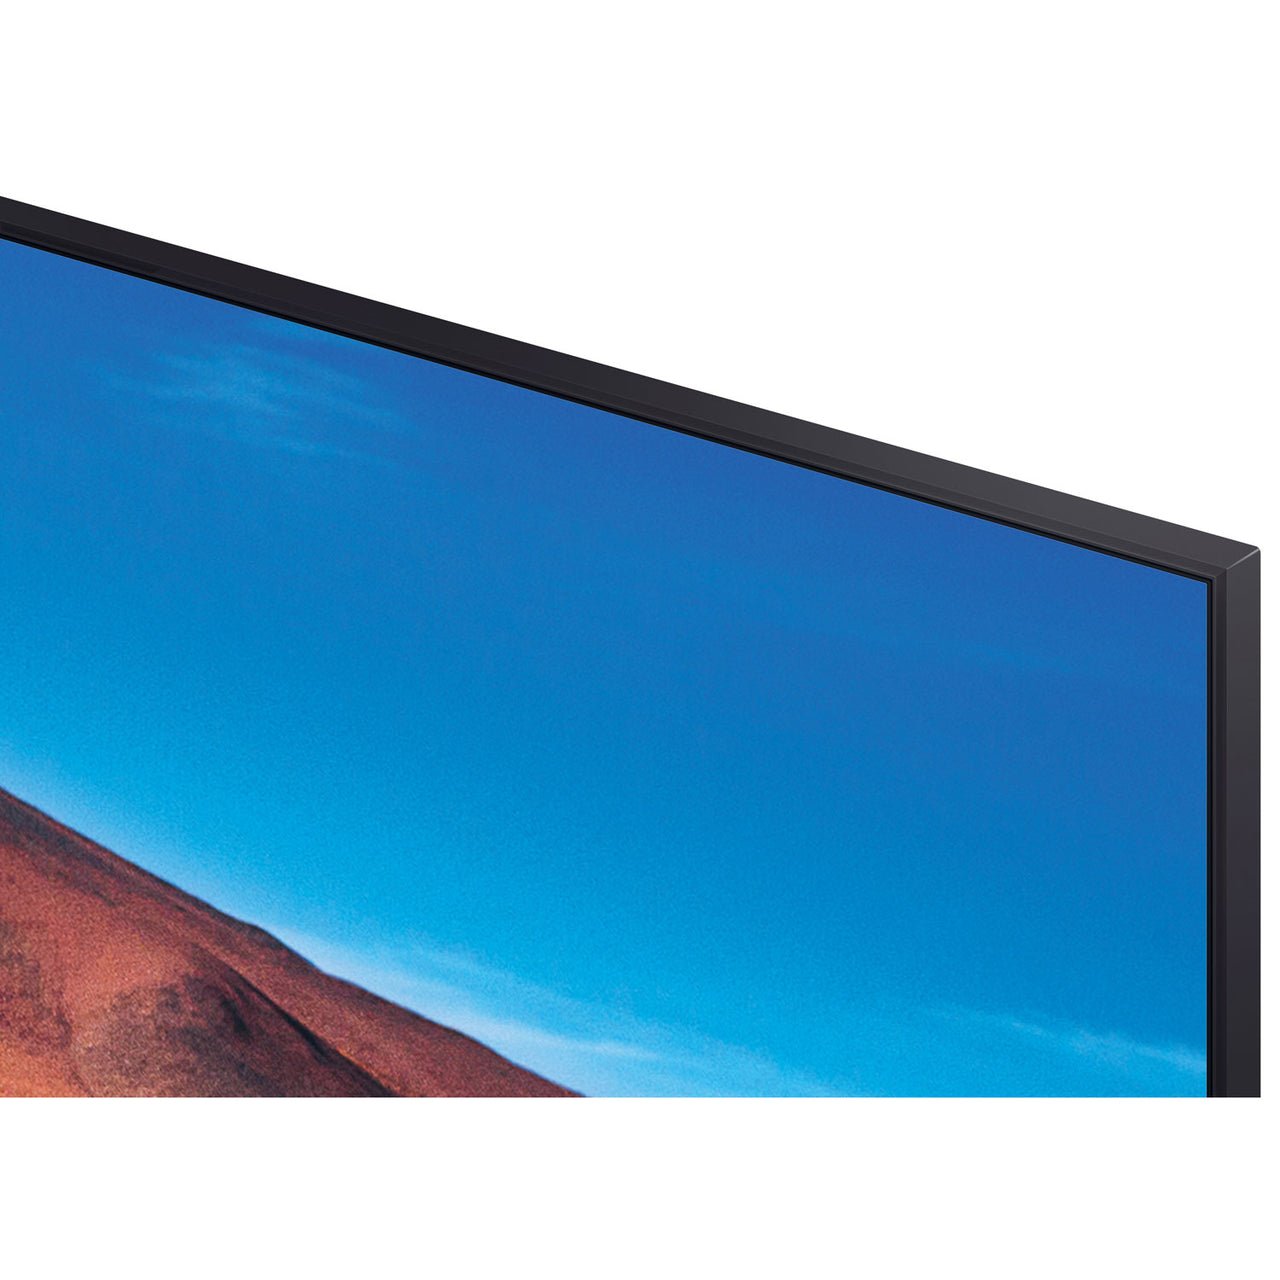 Samsung 50" 4K UHD HDR LED Tizen Smart TV (UN50TU7000FXZC) - Titan Grey